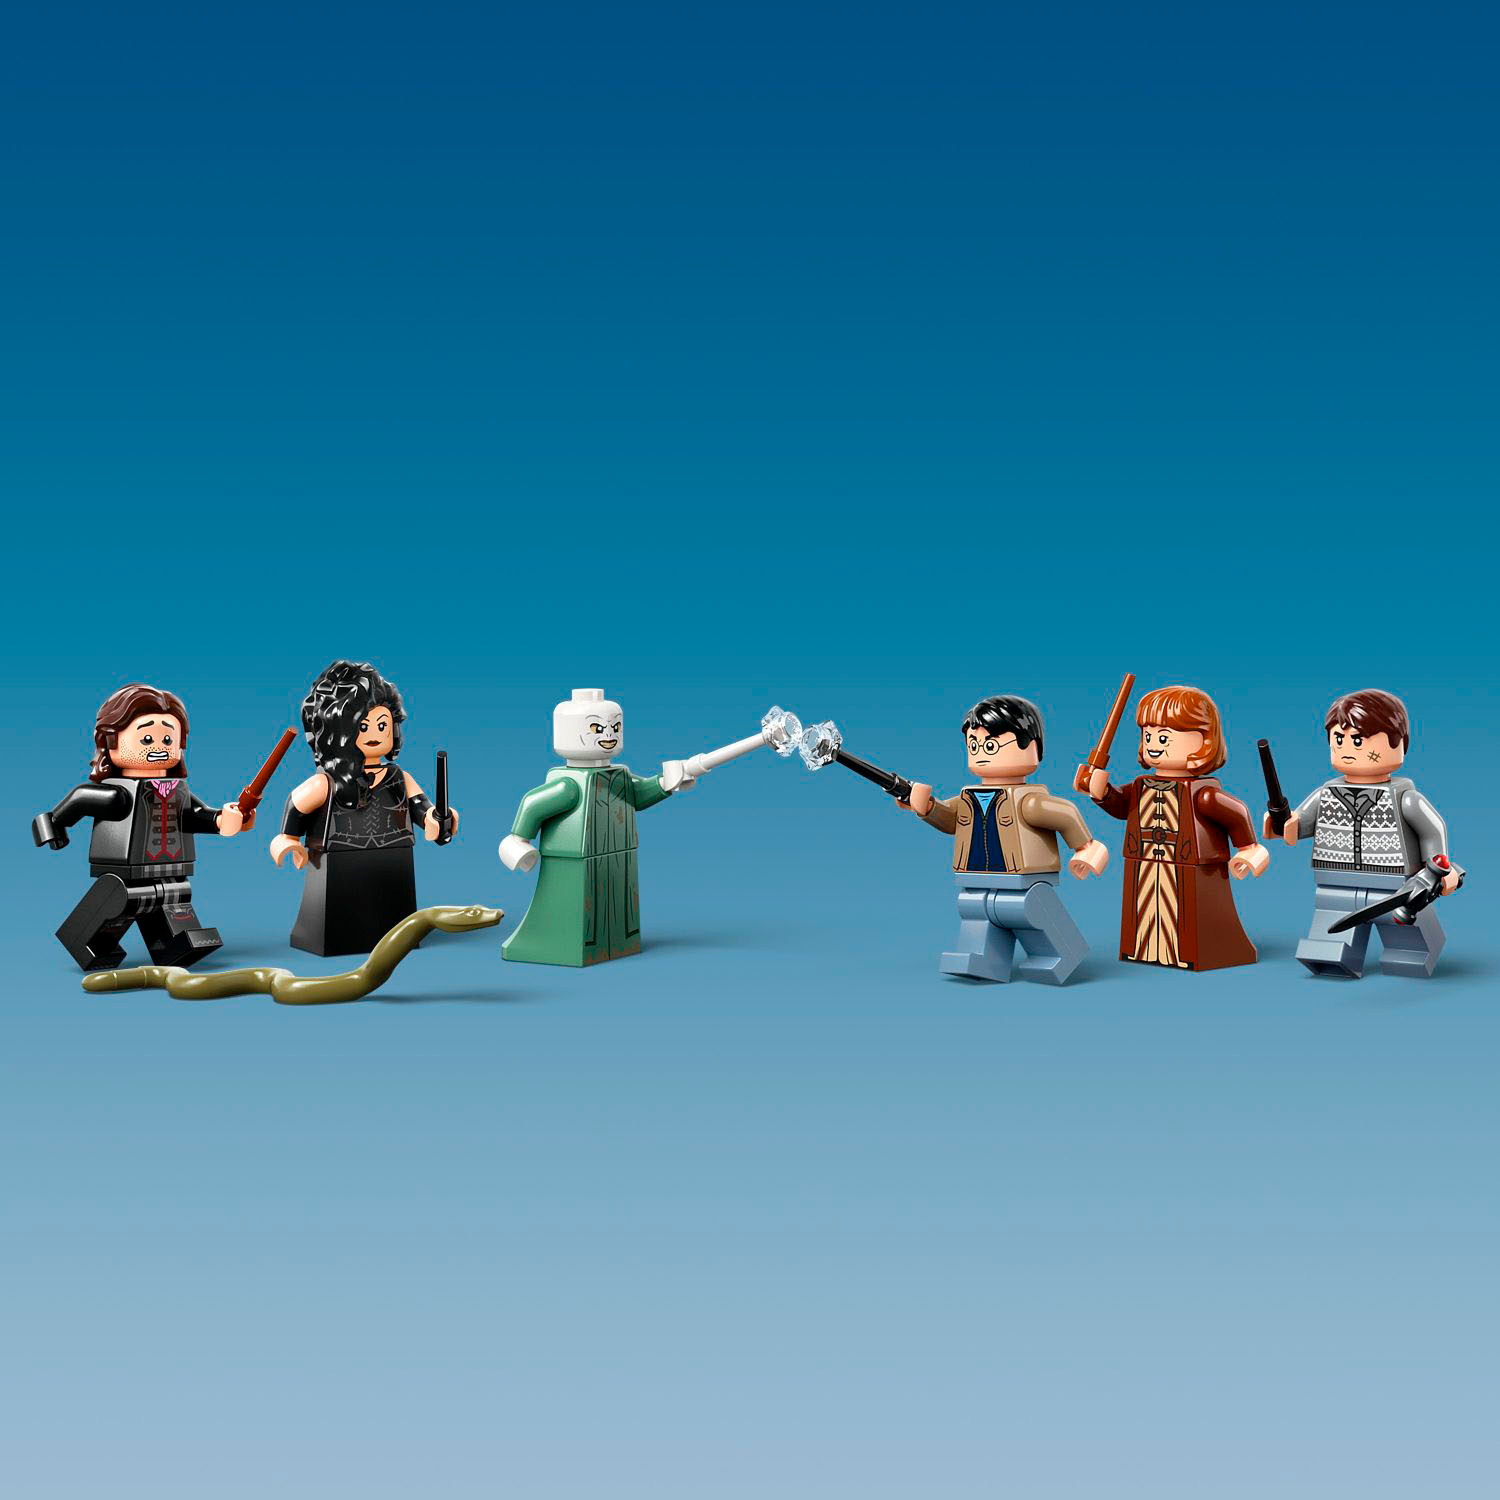 Lego Harry Potter 76415 The Battle of Hogwarts Set